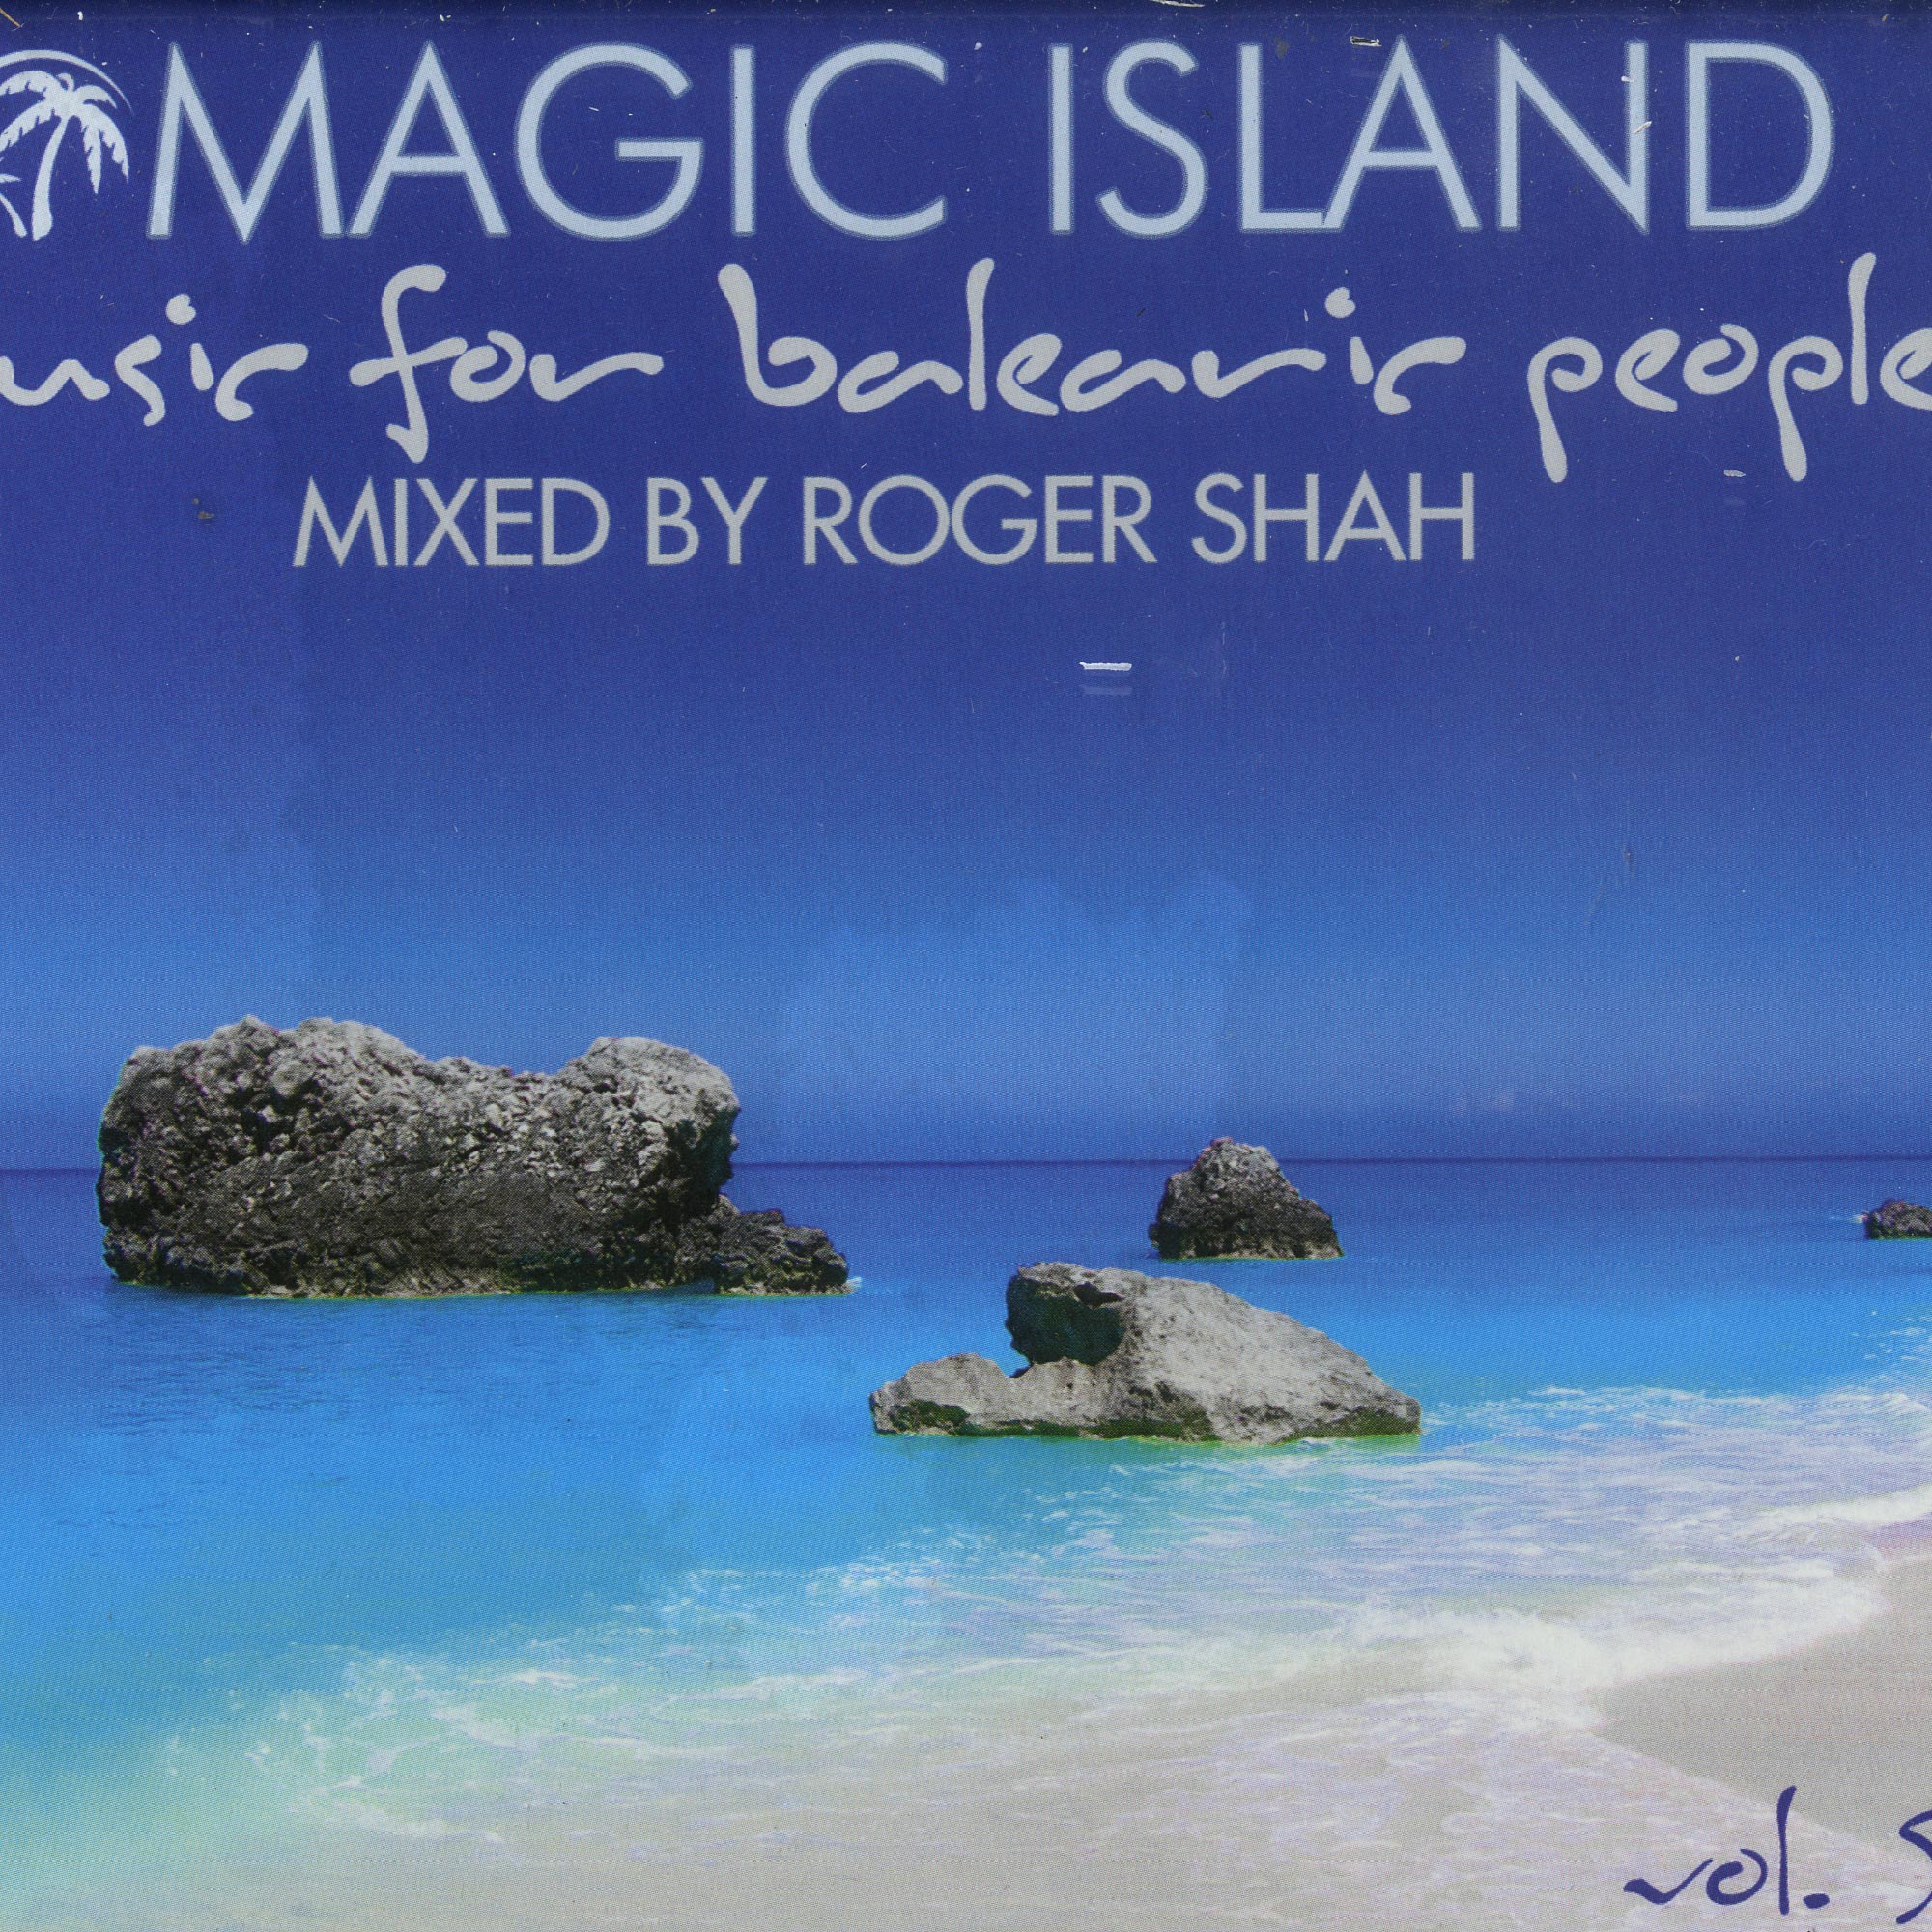 Mixed island. Roger Shah. Magic Island. Roger Shah CD. Roger Shah - Magic Island - Music for Balearic people.